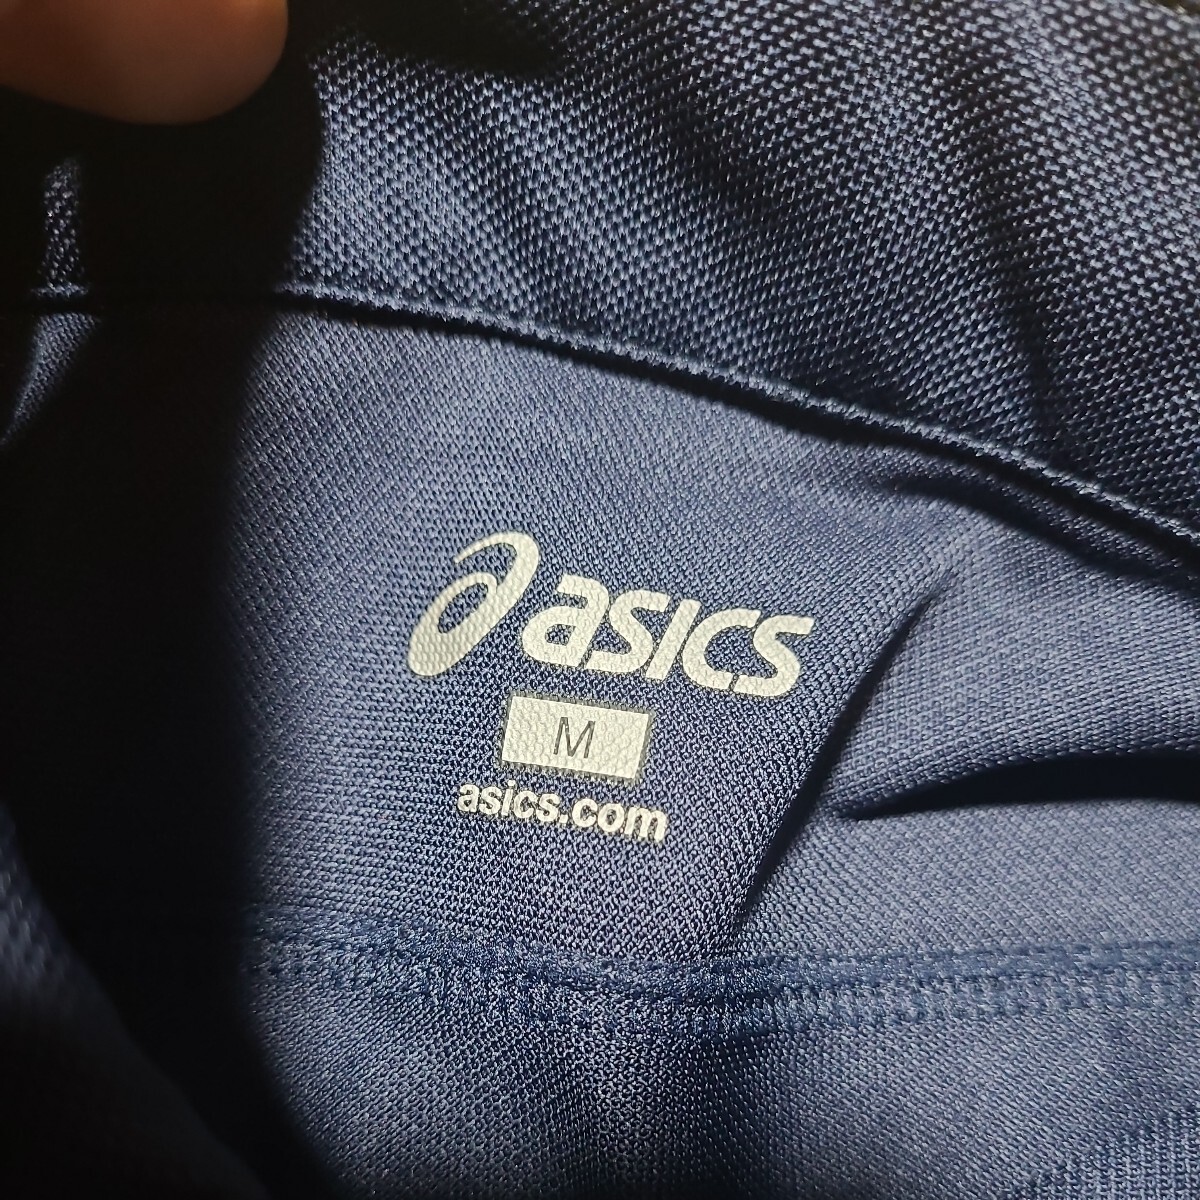 Asics 日本代表 Japan ボタンダウンシャツ サイズM ポロシャツ 世界陸上 陸上 アシックス_画像7